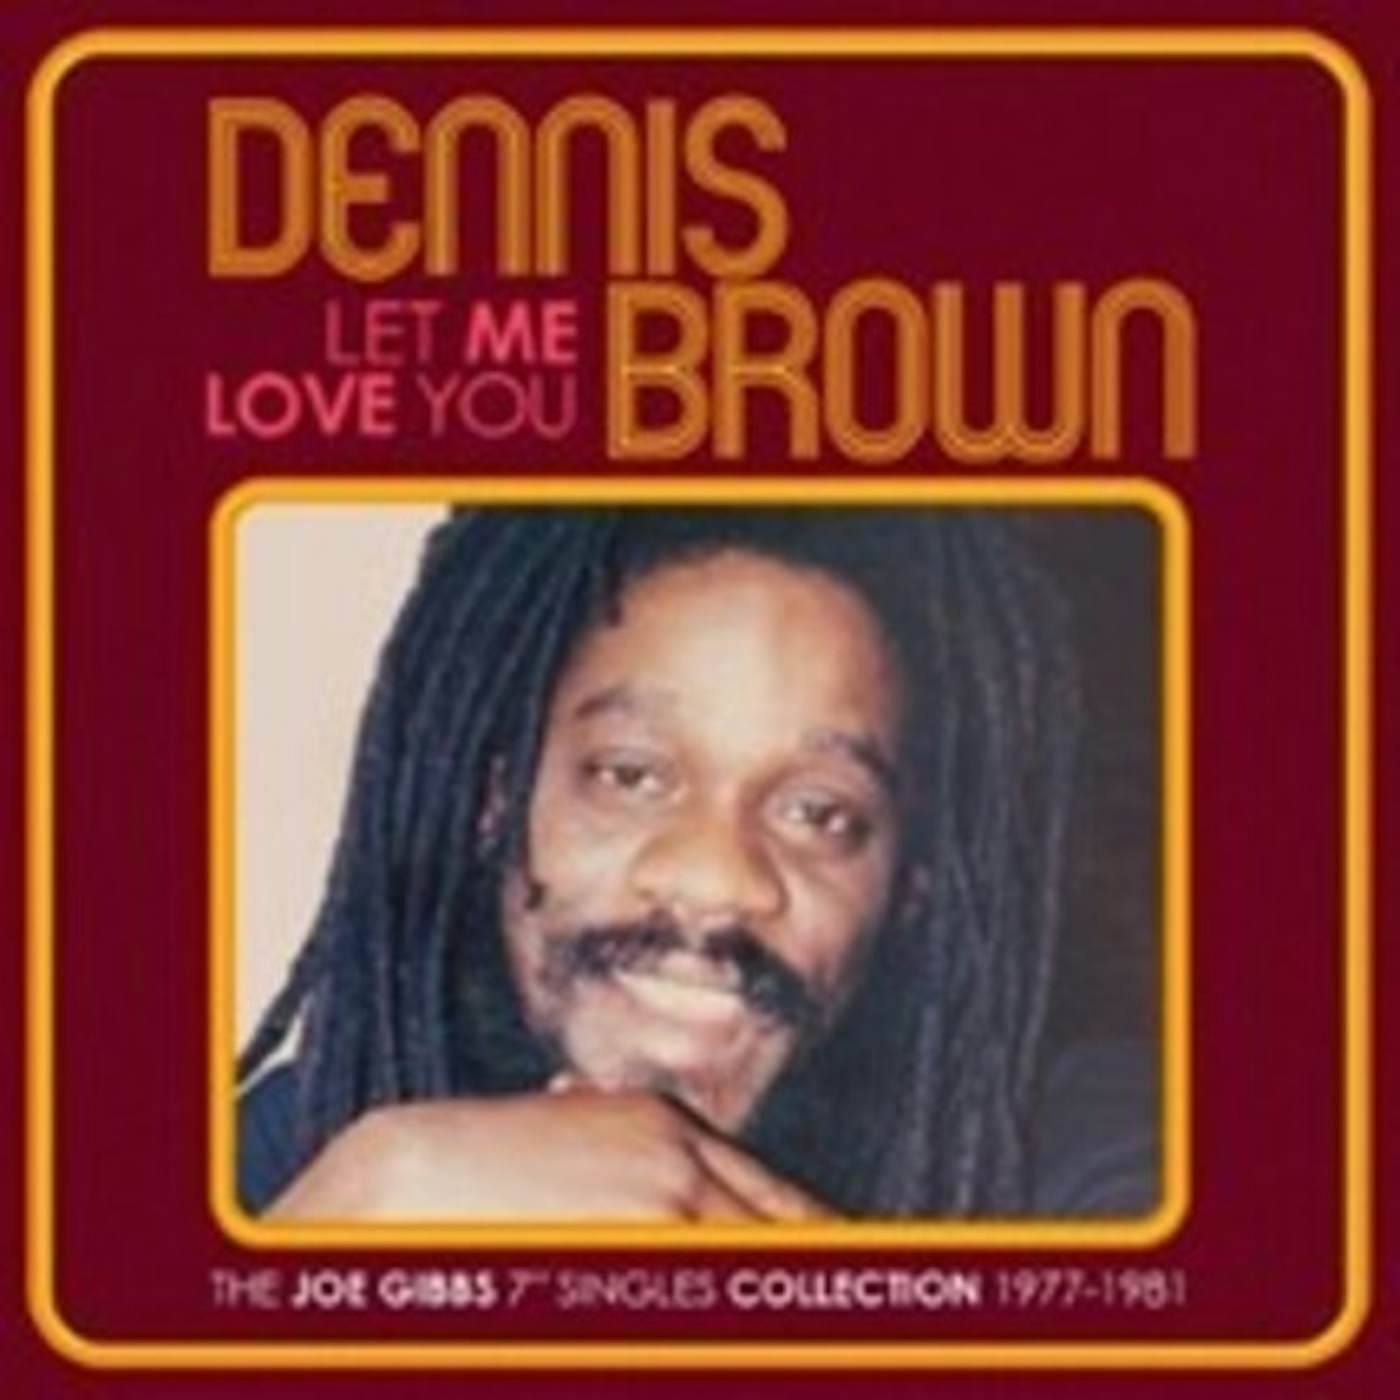 Dennis Brown LET ME LOVE YOU: JOE GIBBS 7-INCH SINGLES COLL CD